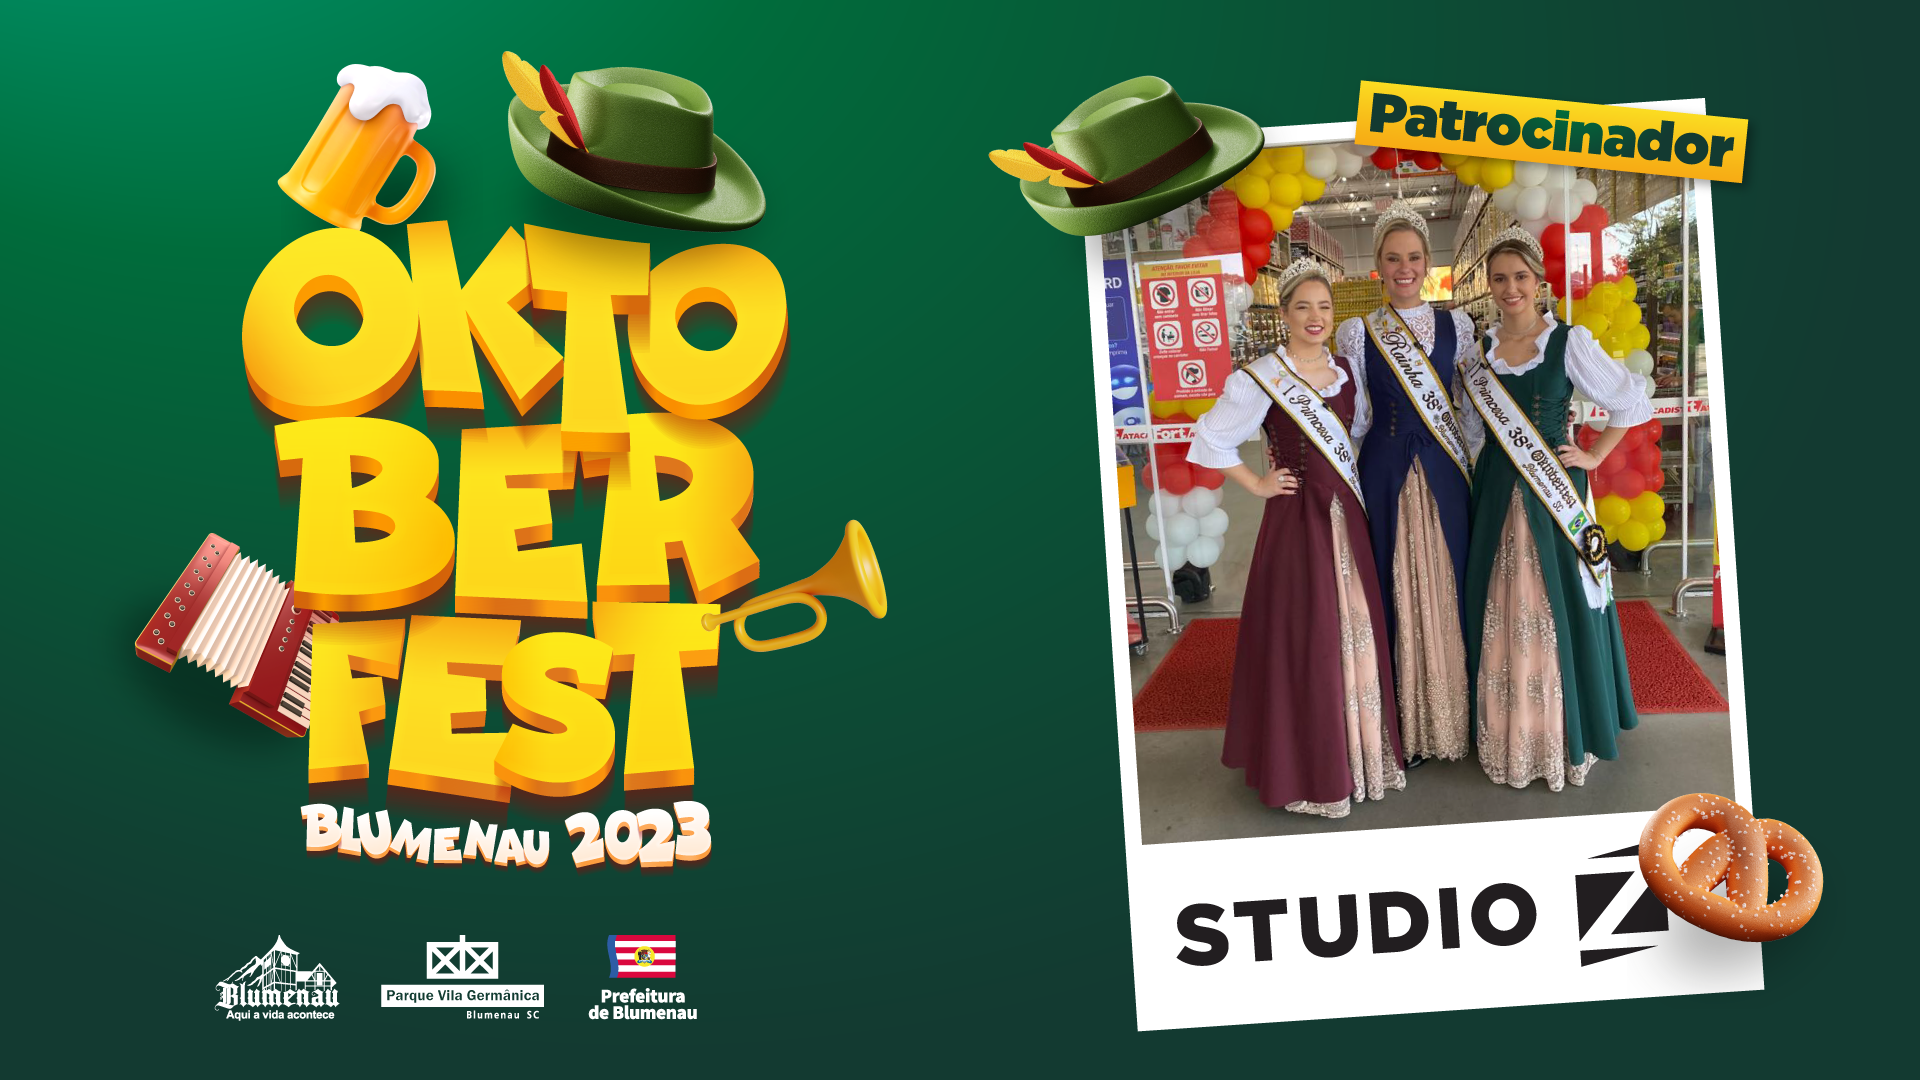 Pela primeira vez, Studio Z patrocina a Oktoberfest Blumenau